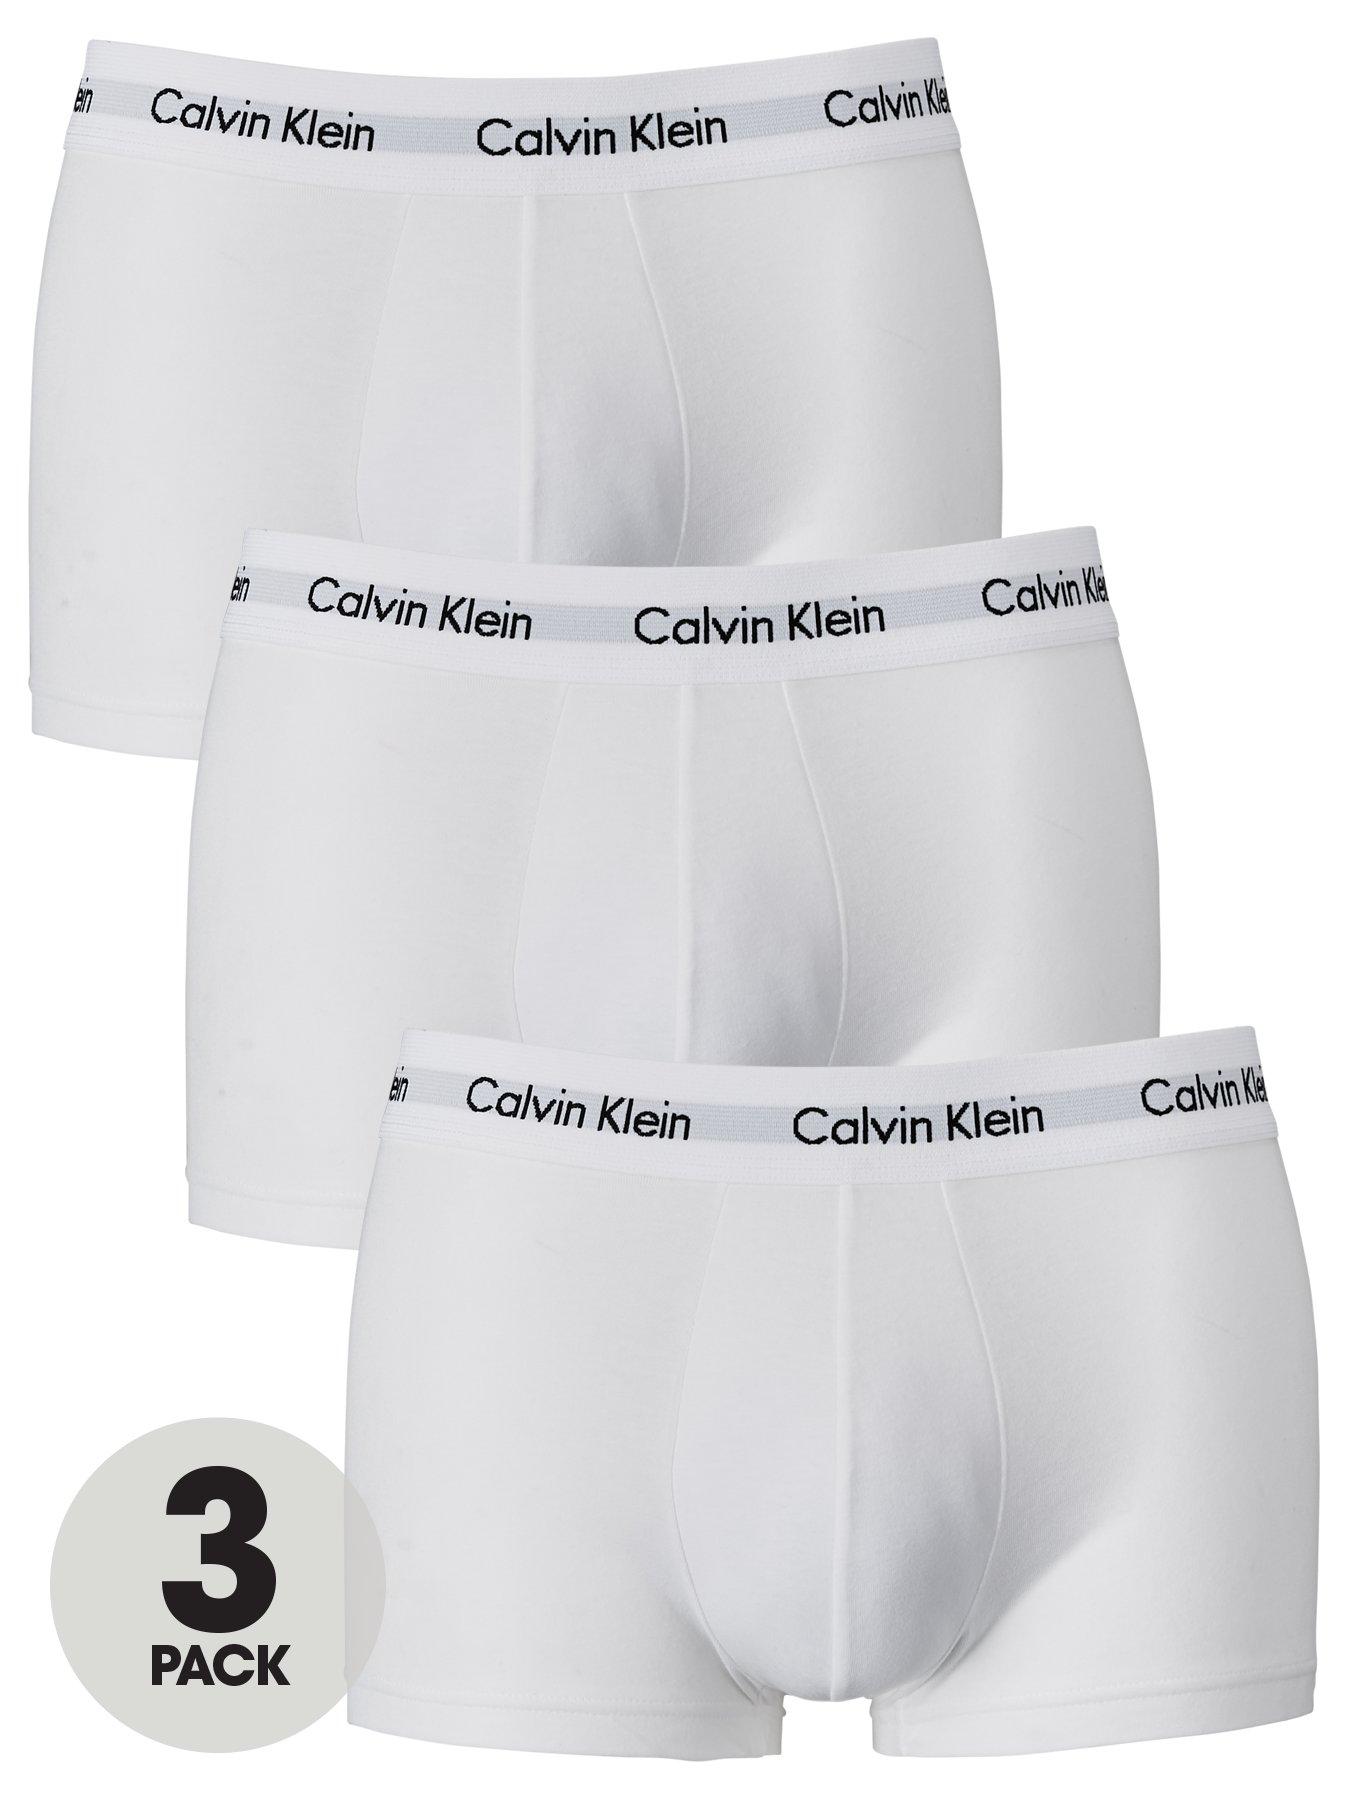 Underwear & Socks 3 Pack of Low Rise Trunks - White